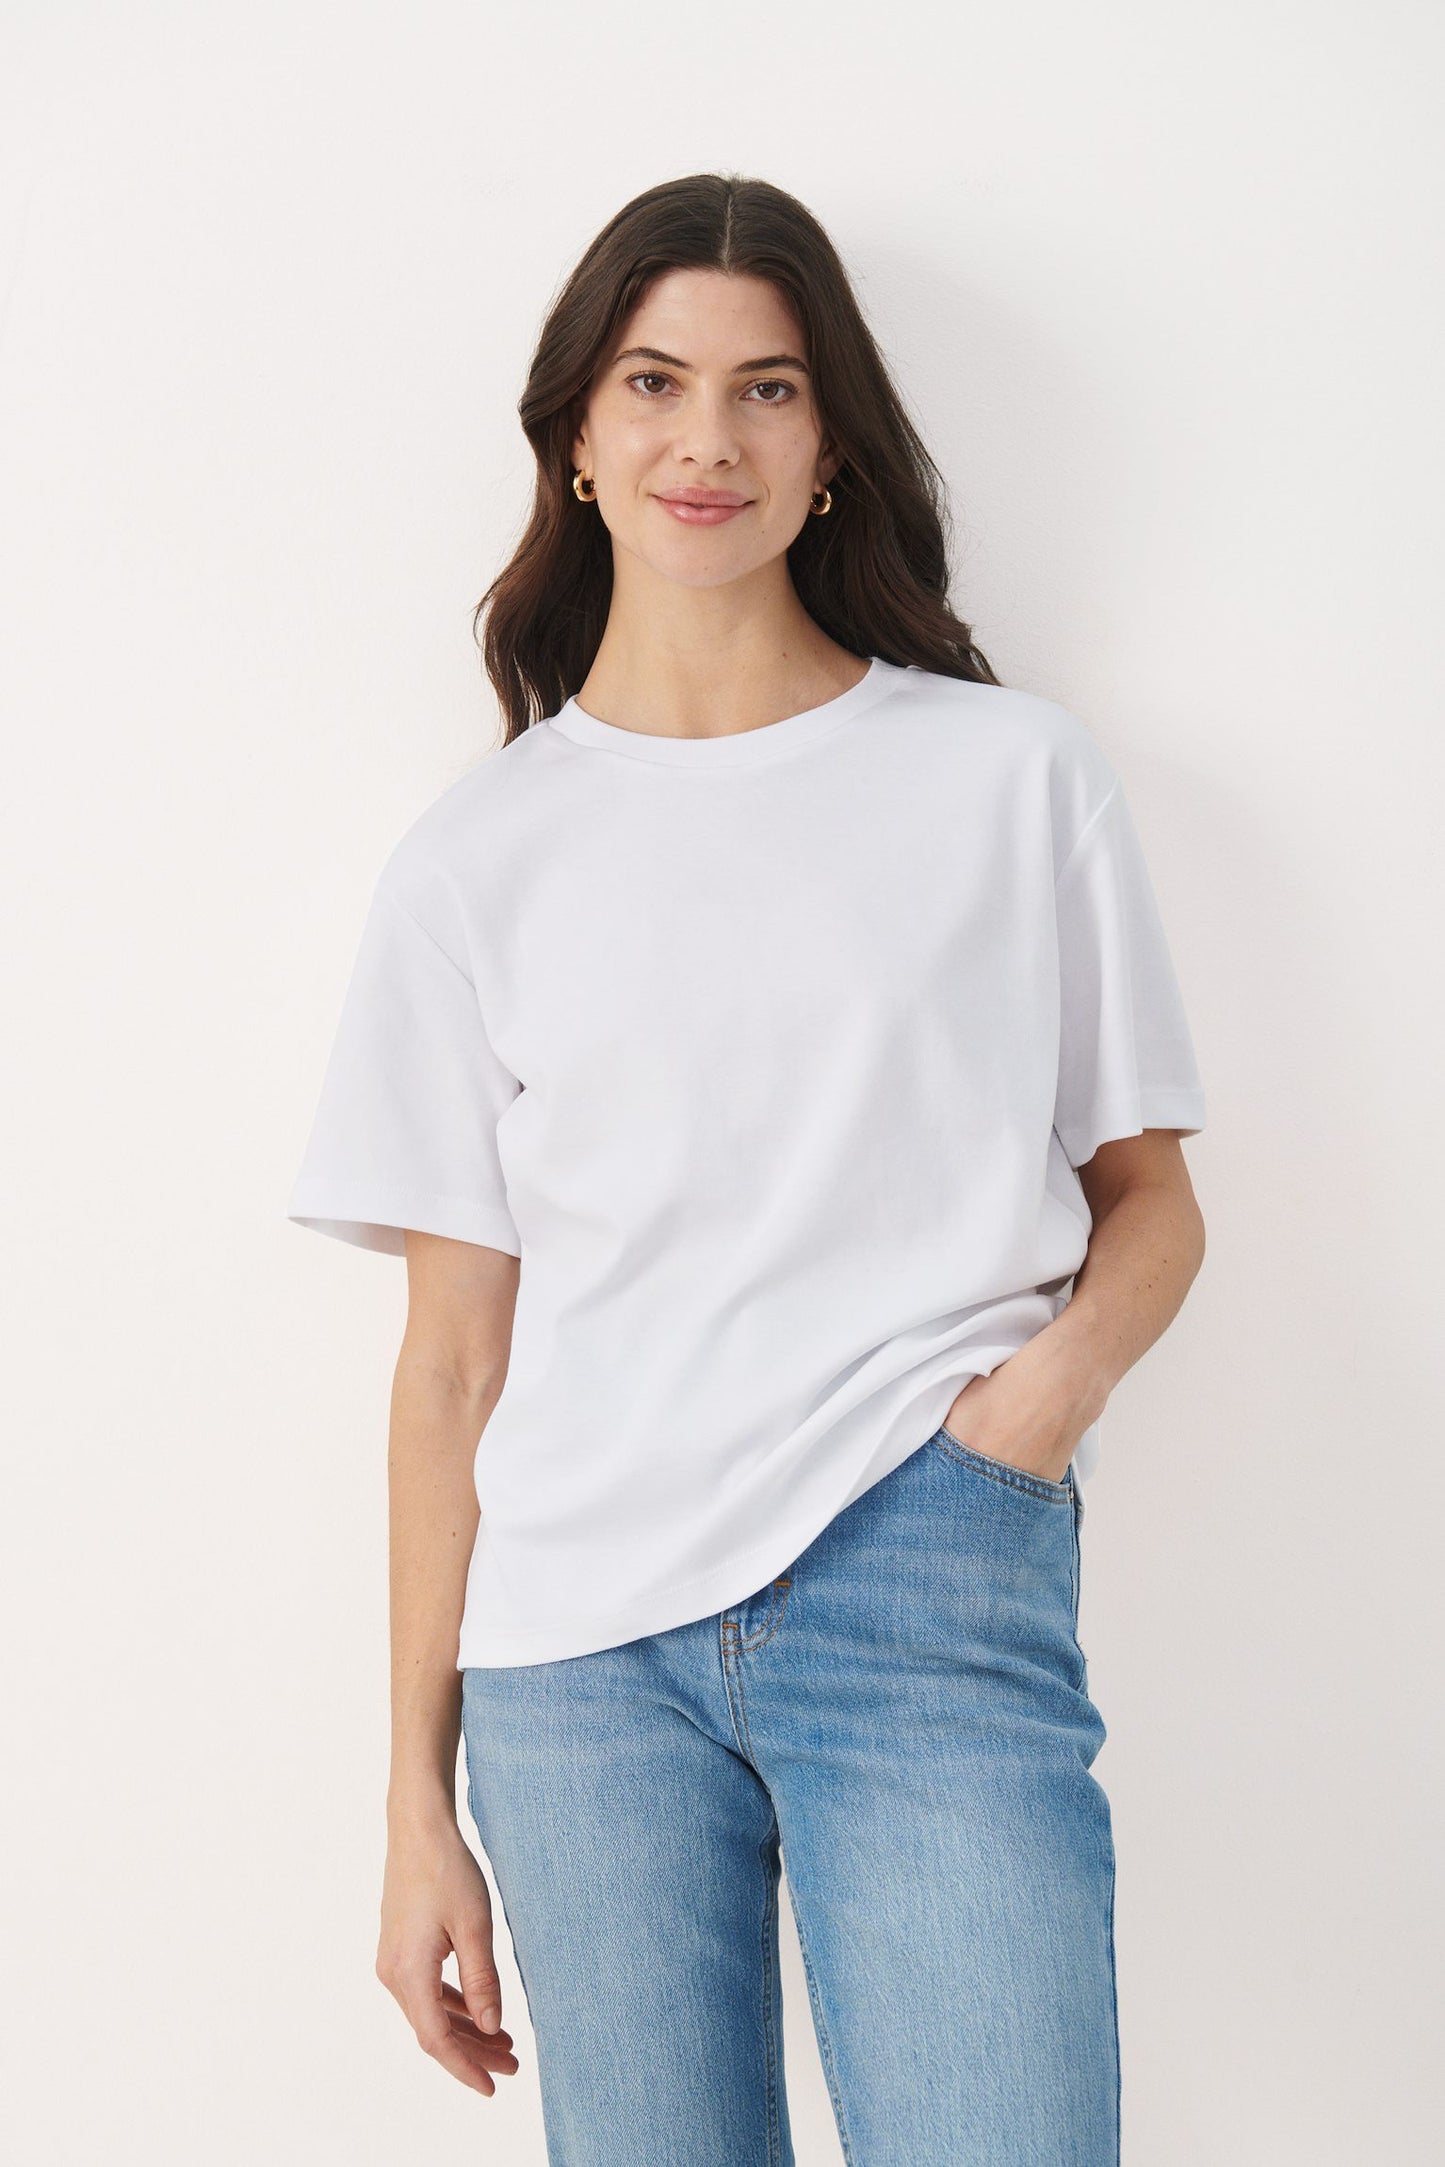 Anne T-shirt - Part Two (white)